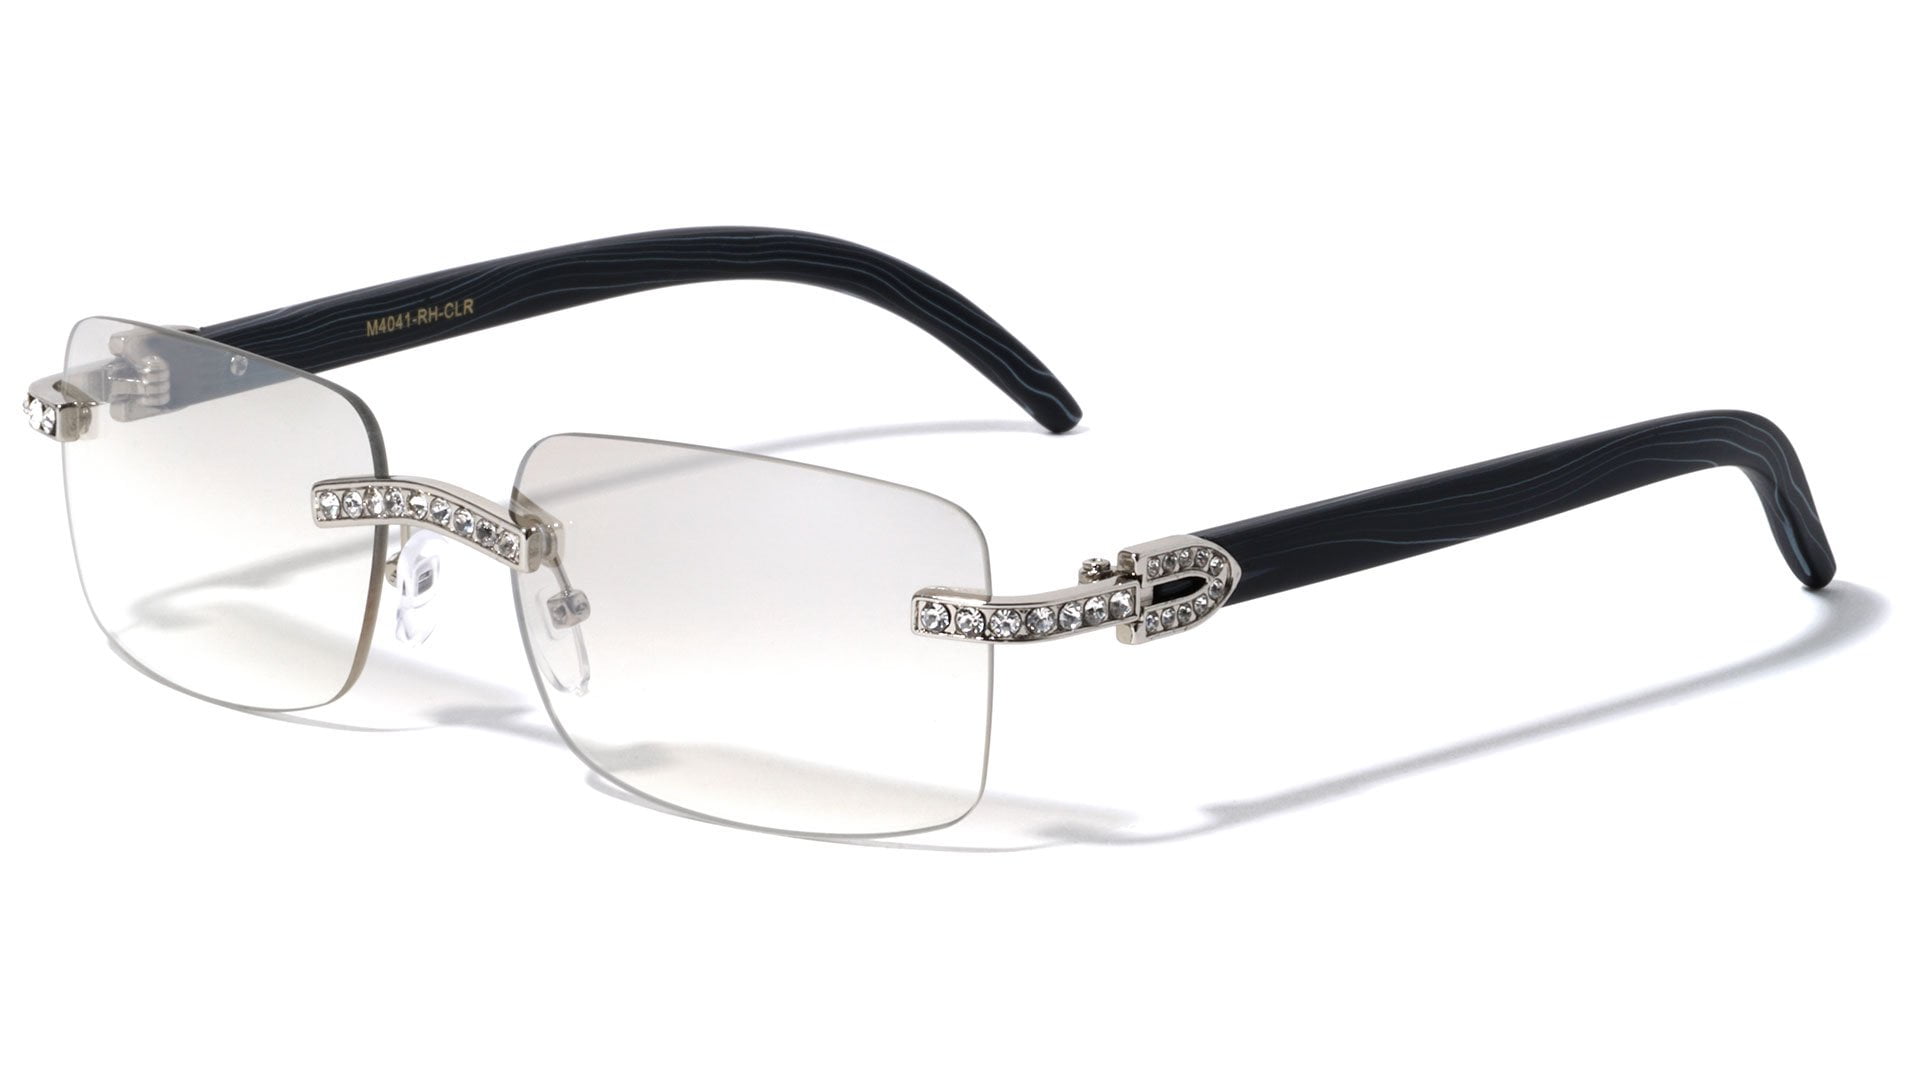 EYEWEAR TITANIUM GLASSES FRAME men Eyeglasses computer Optical Reading Eye Lens 